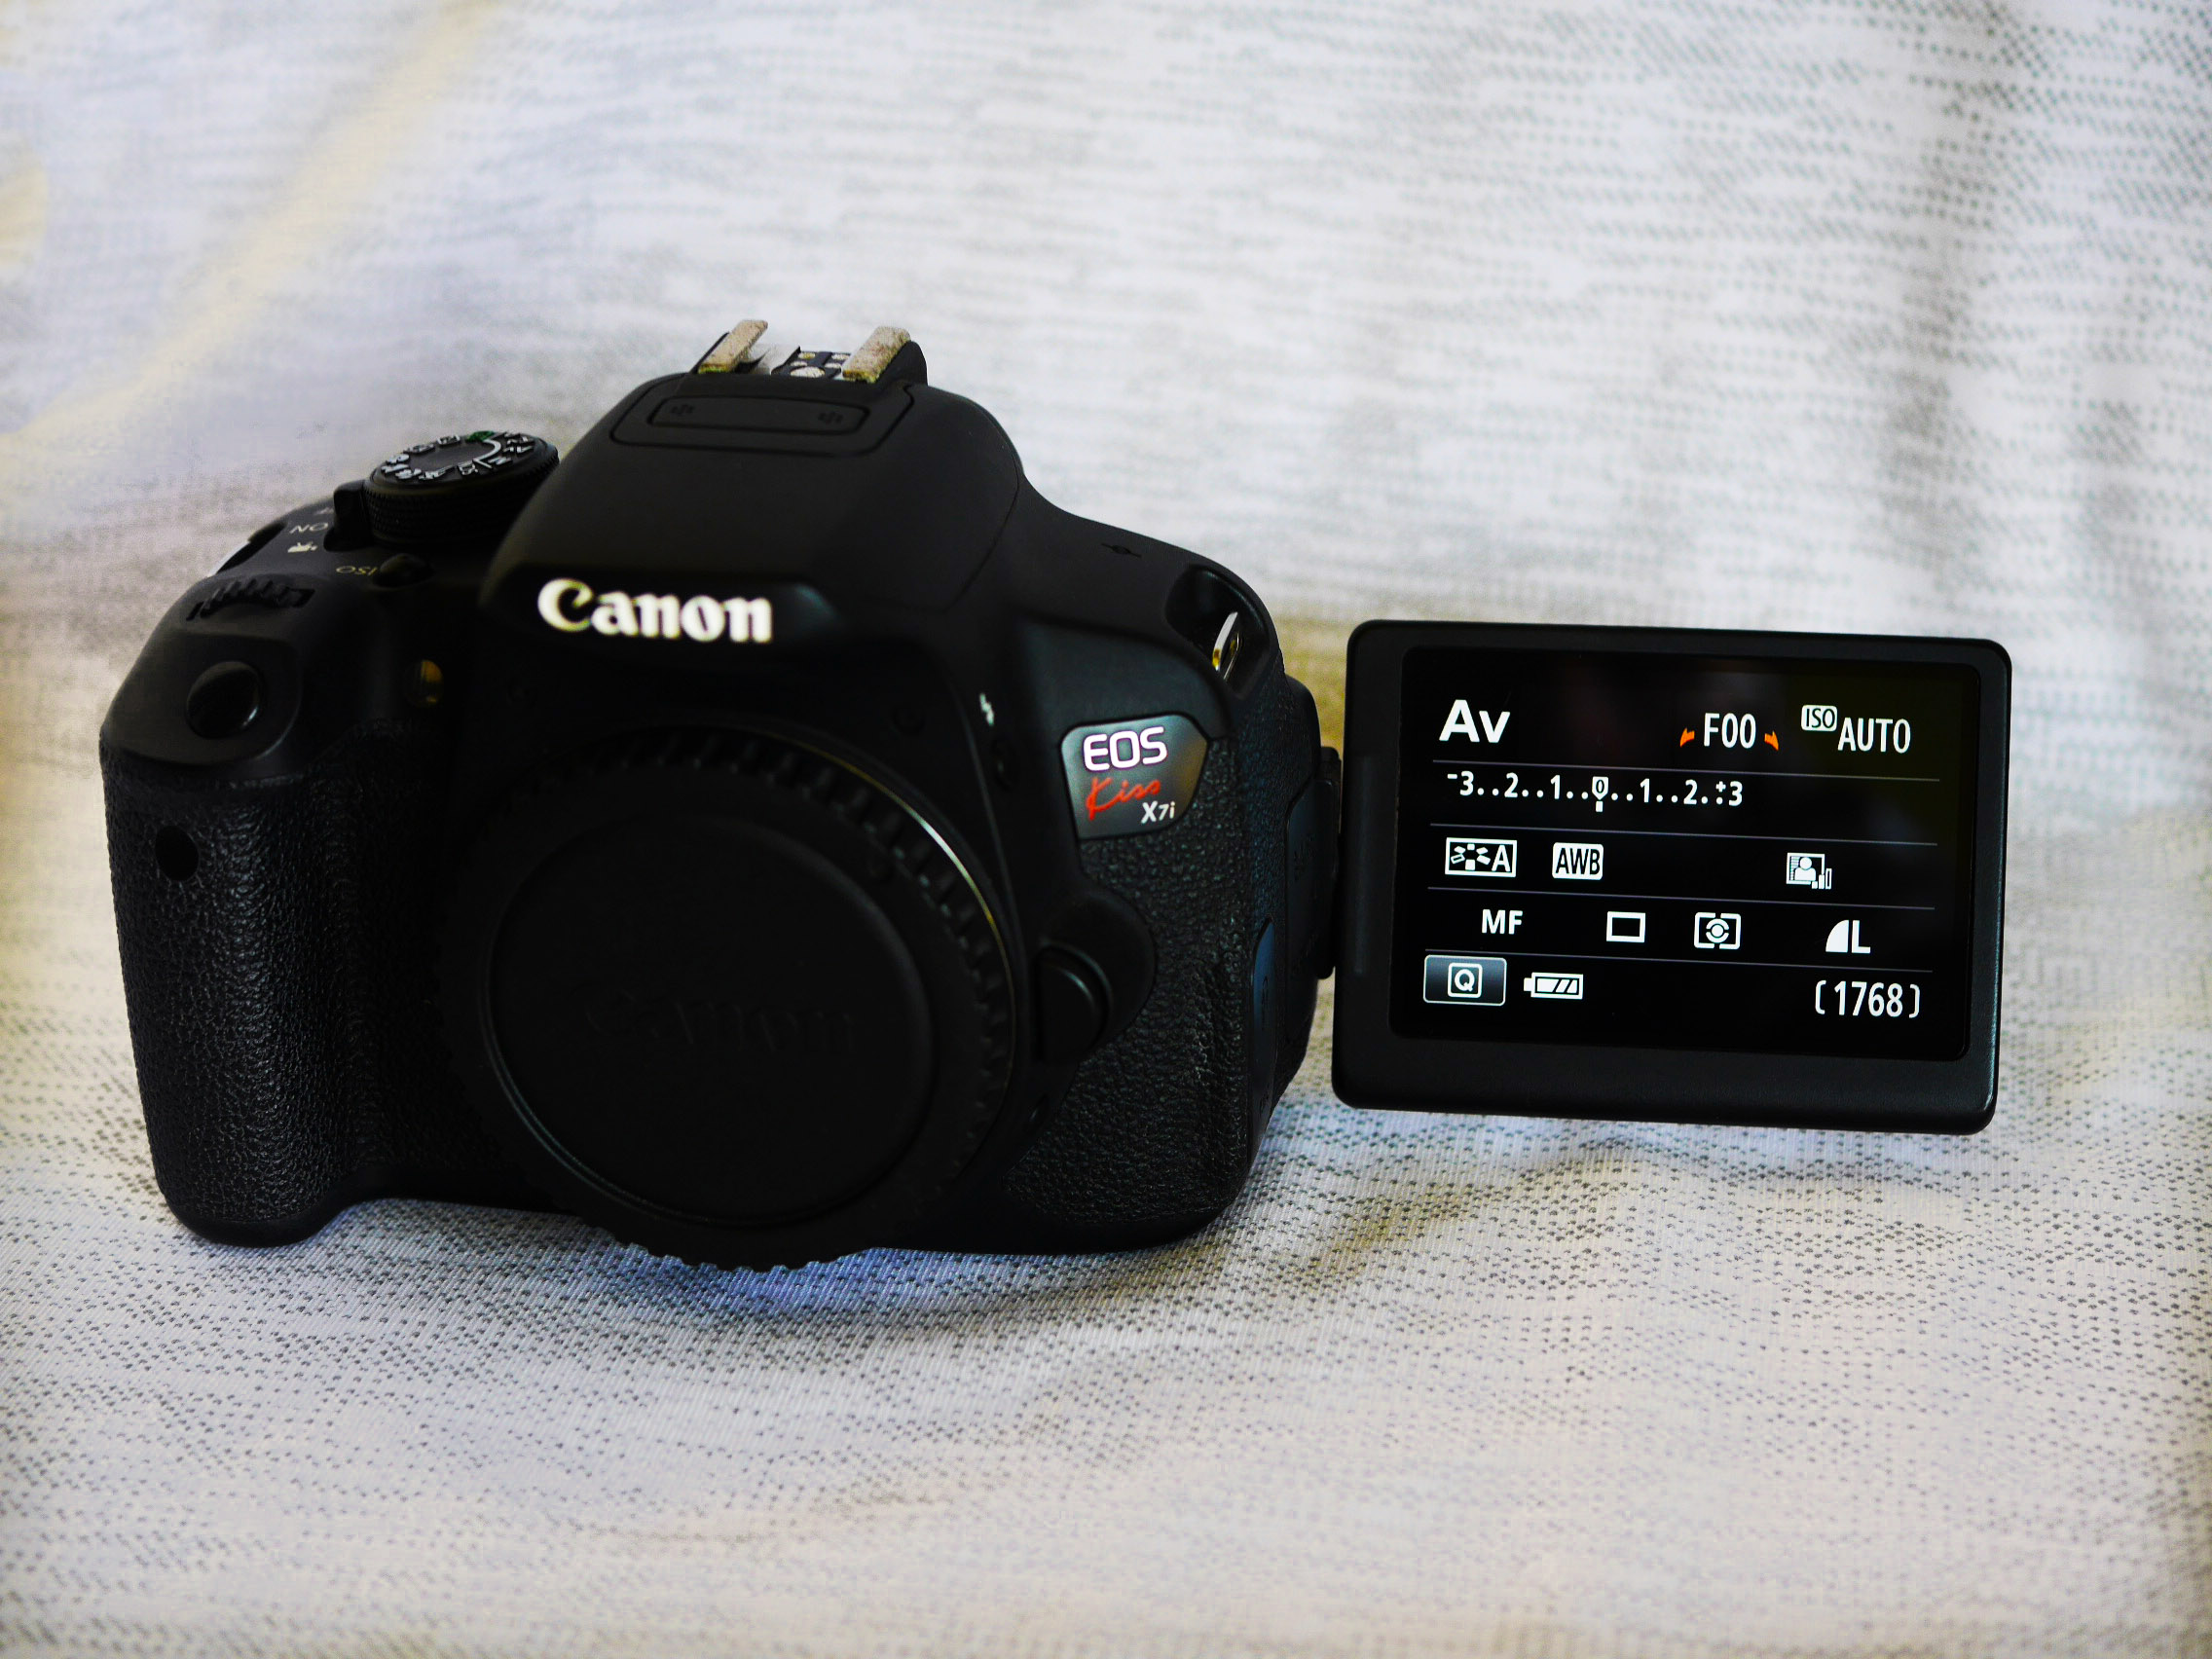 Canon Kiss X7i (Canon EOS 700D Rebel T5i) DSLR Black Body. Digital